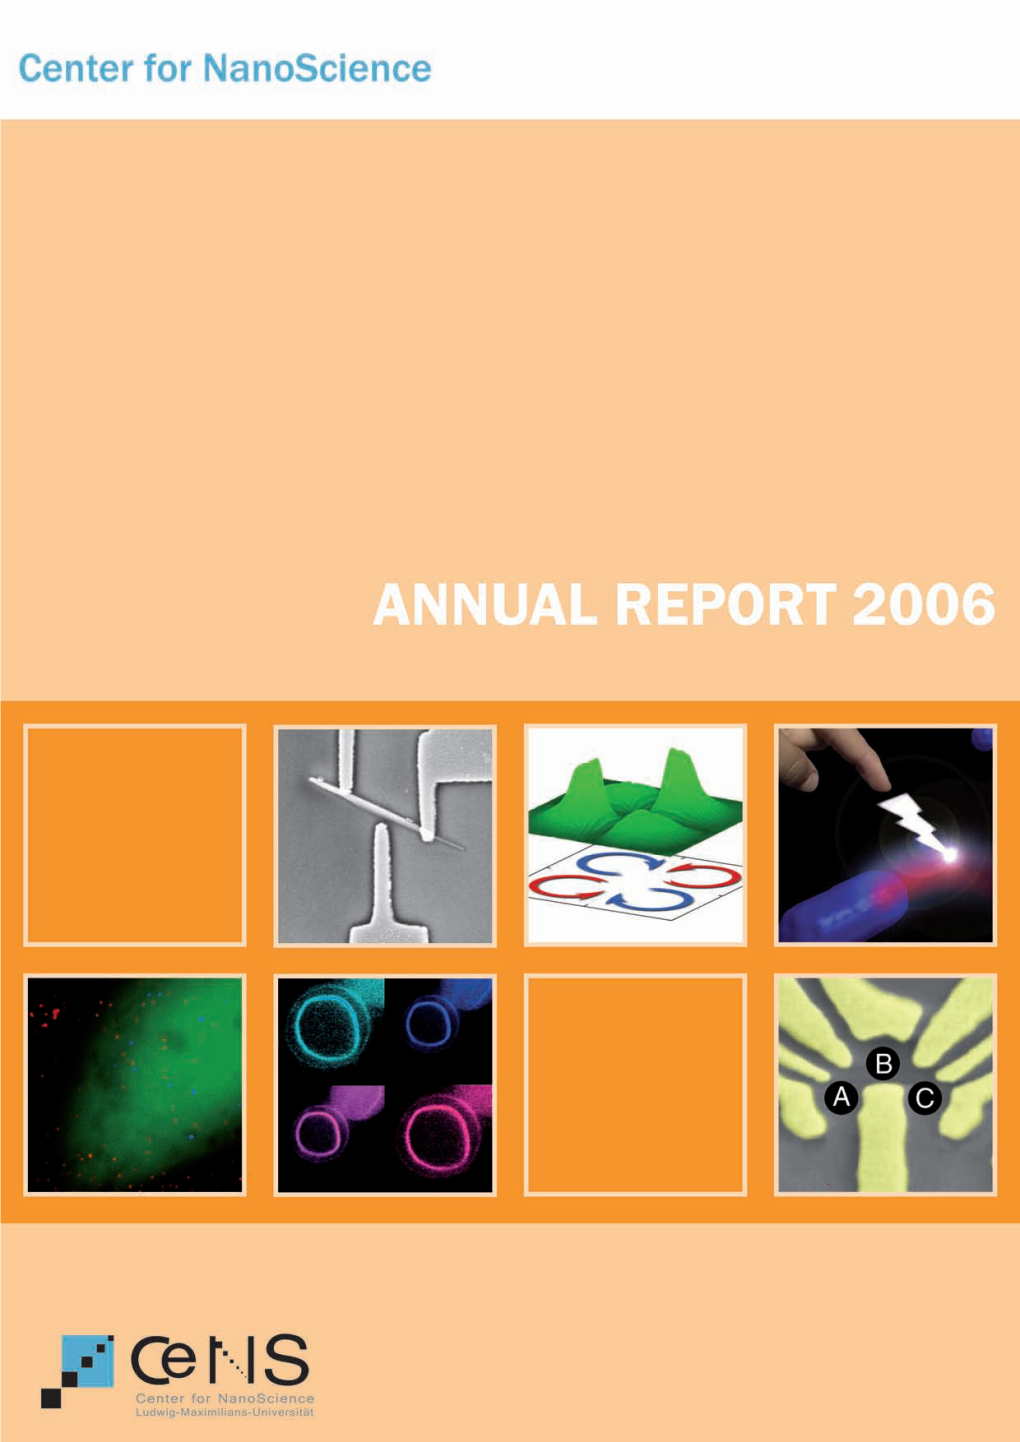 Cens Annual Report 2006